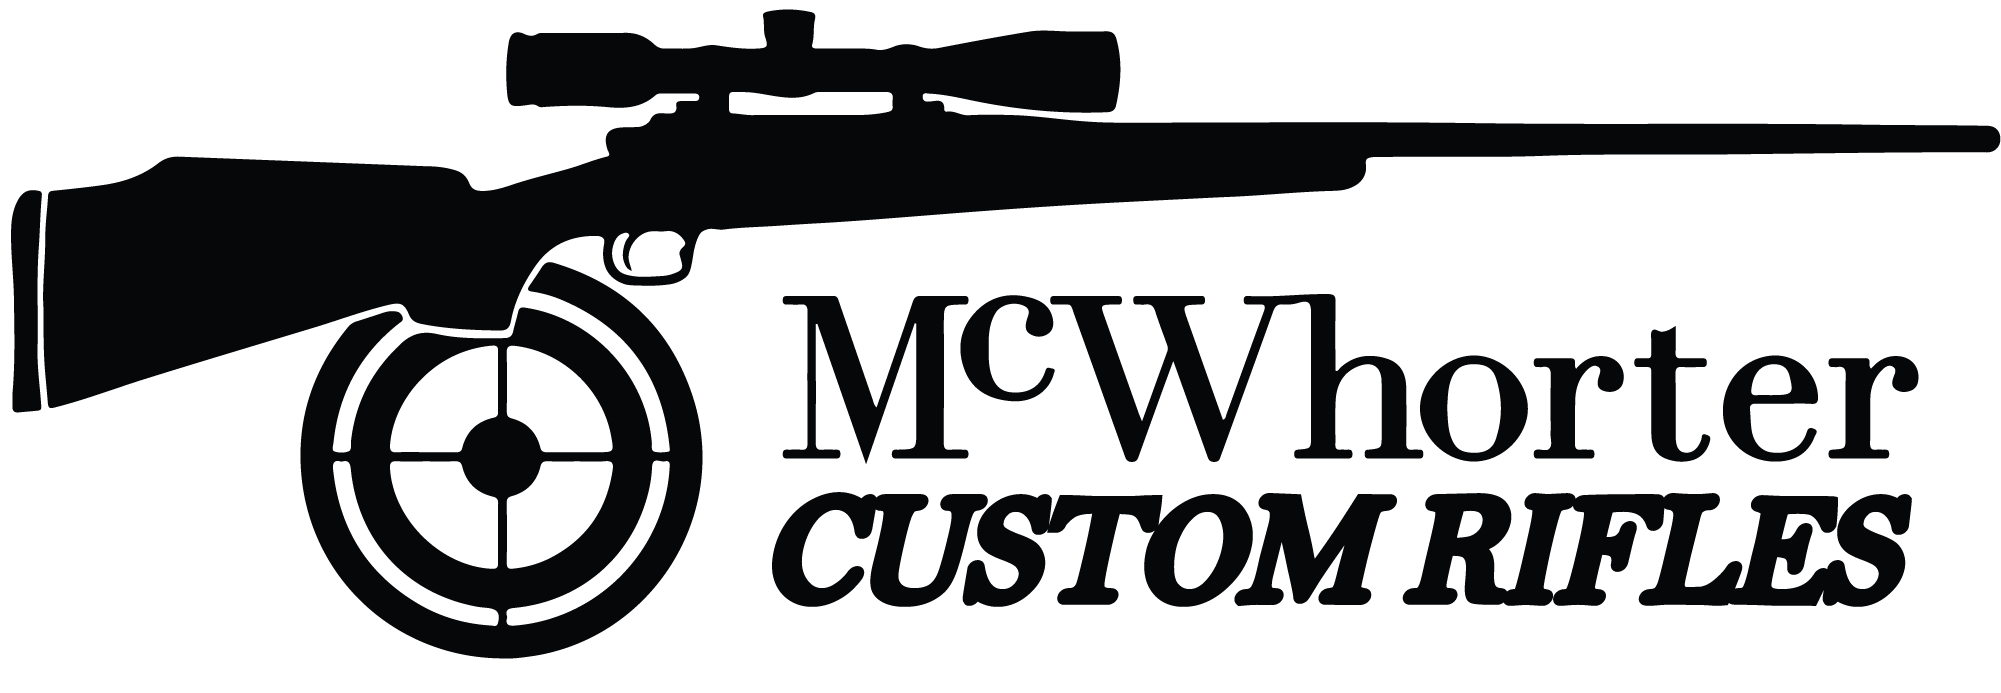 ScopeShield Custom Transfer McWhorter